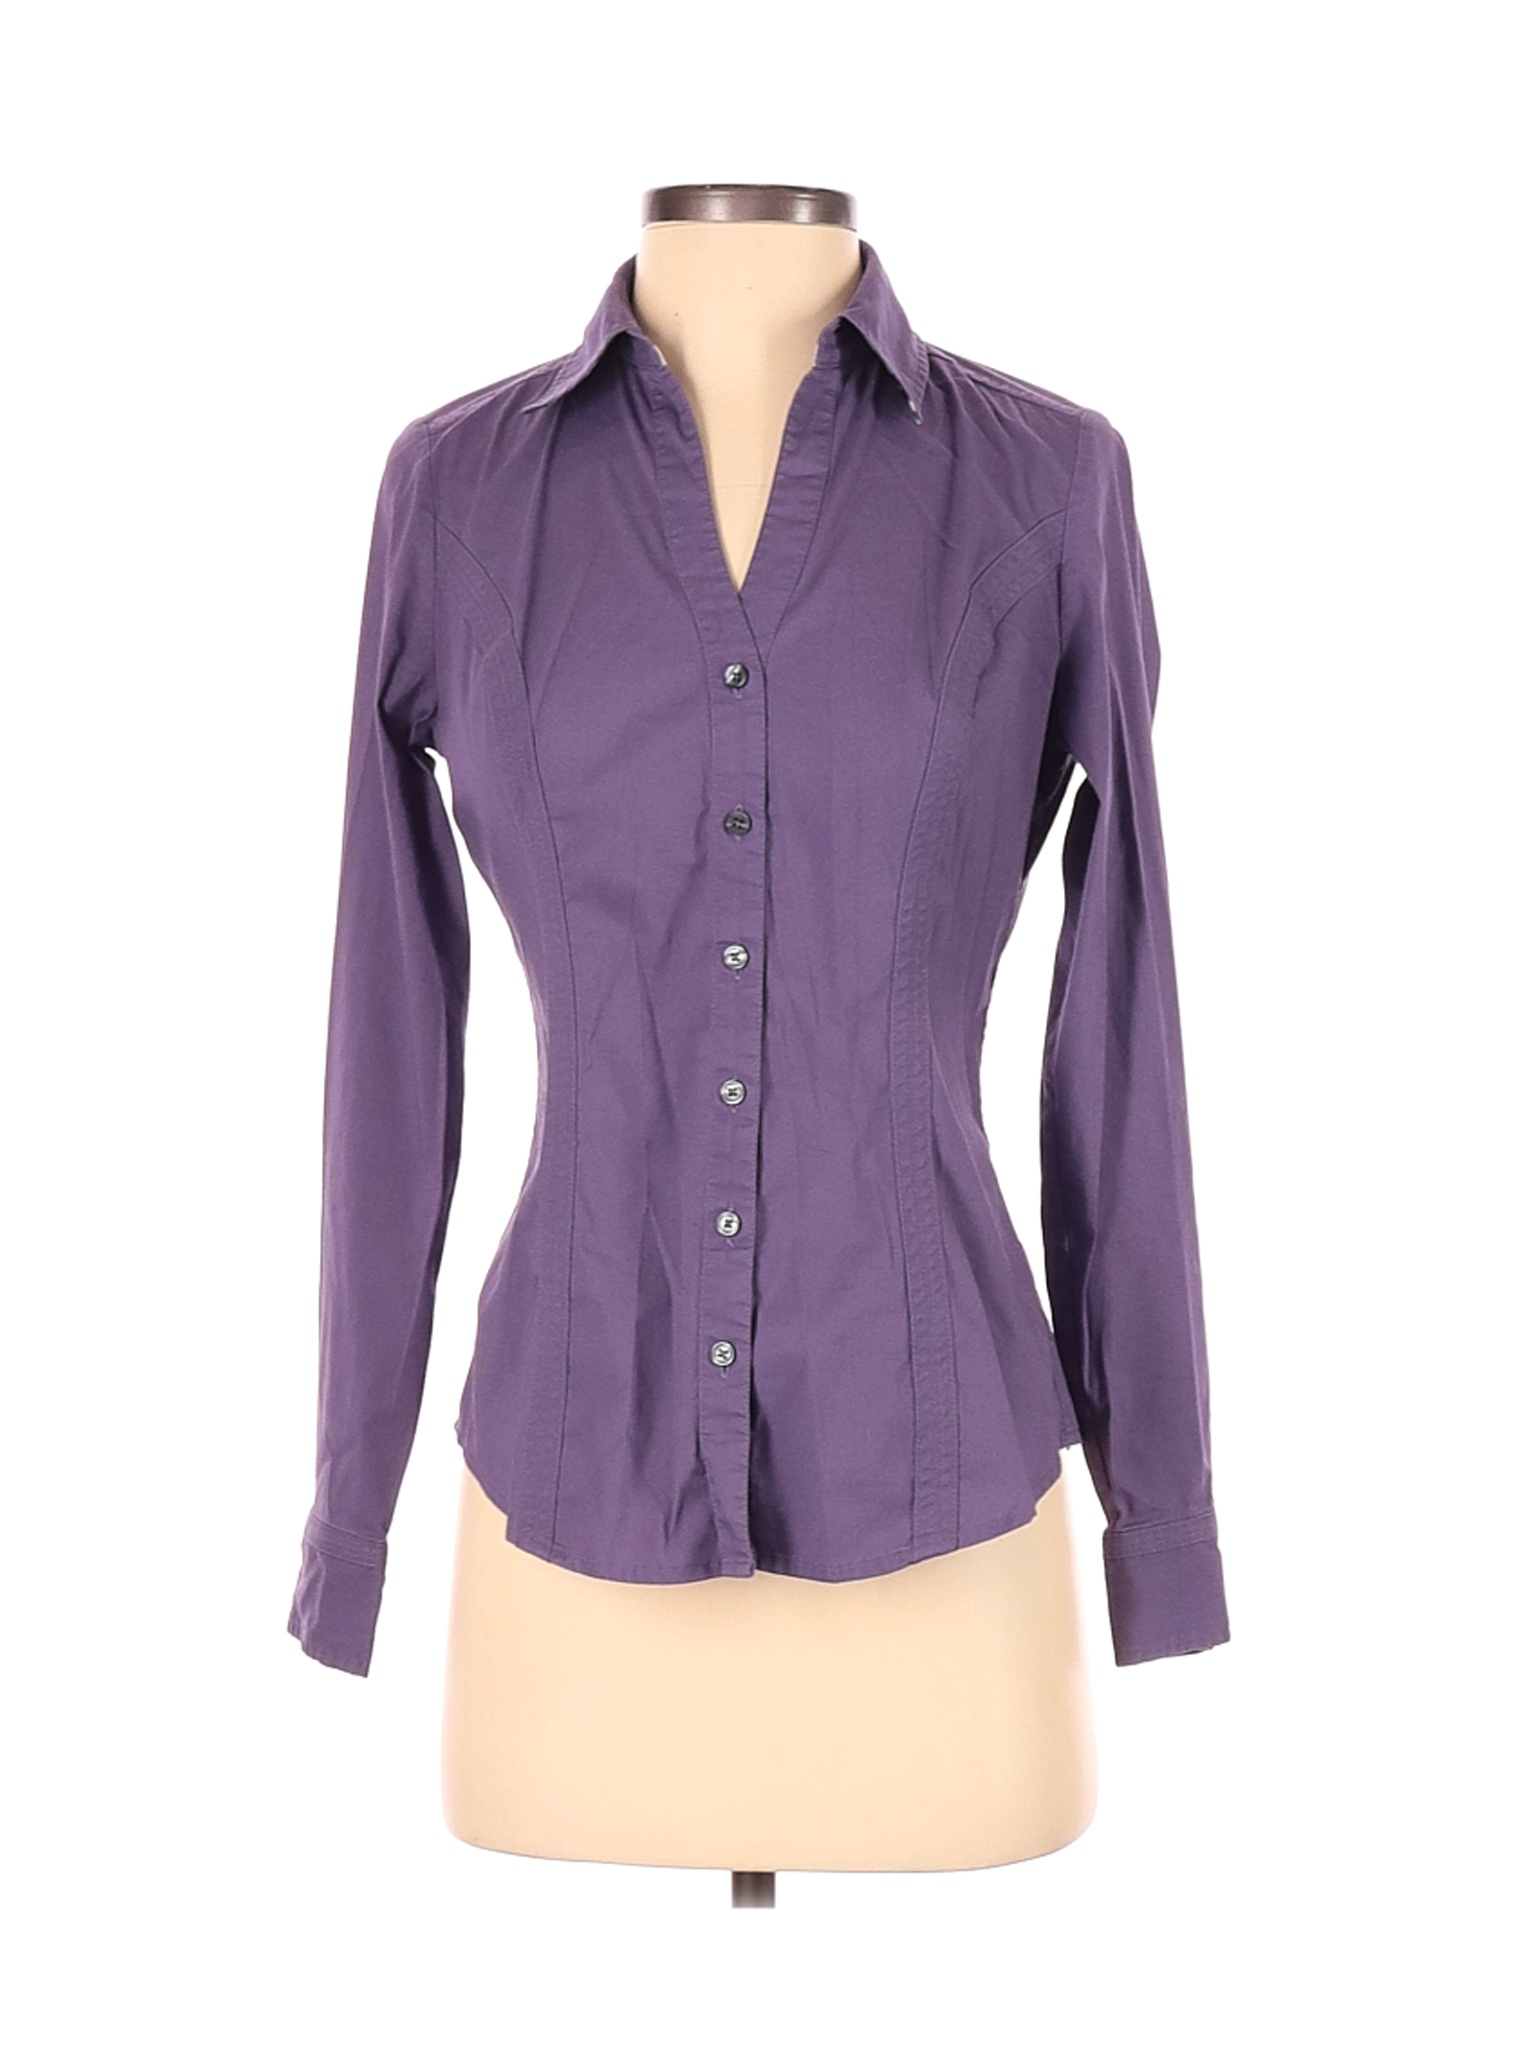 Express Women Purple Long Sleeve Button-Down Shirt XS | eBay